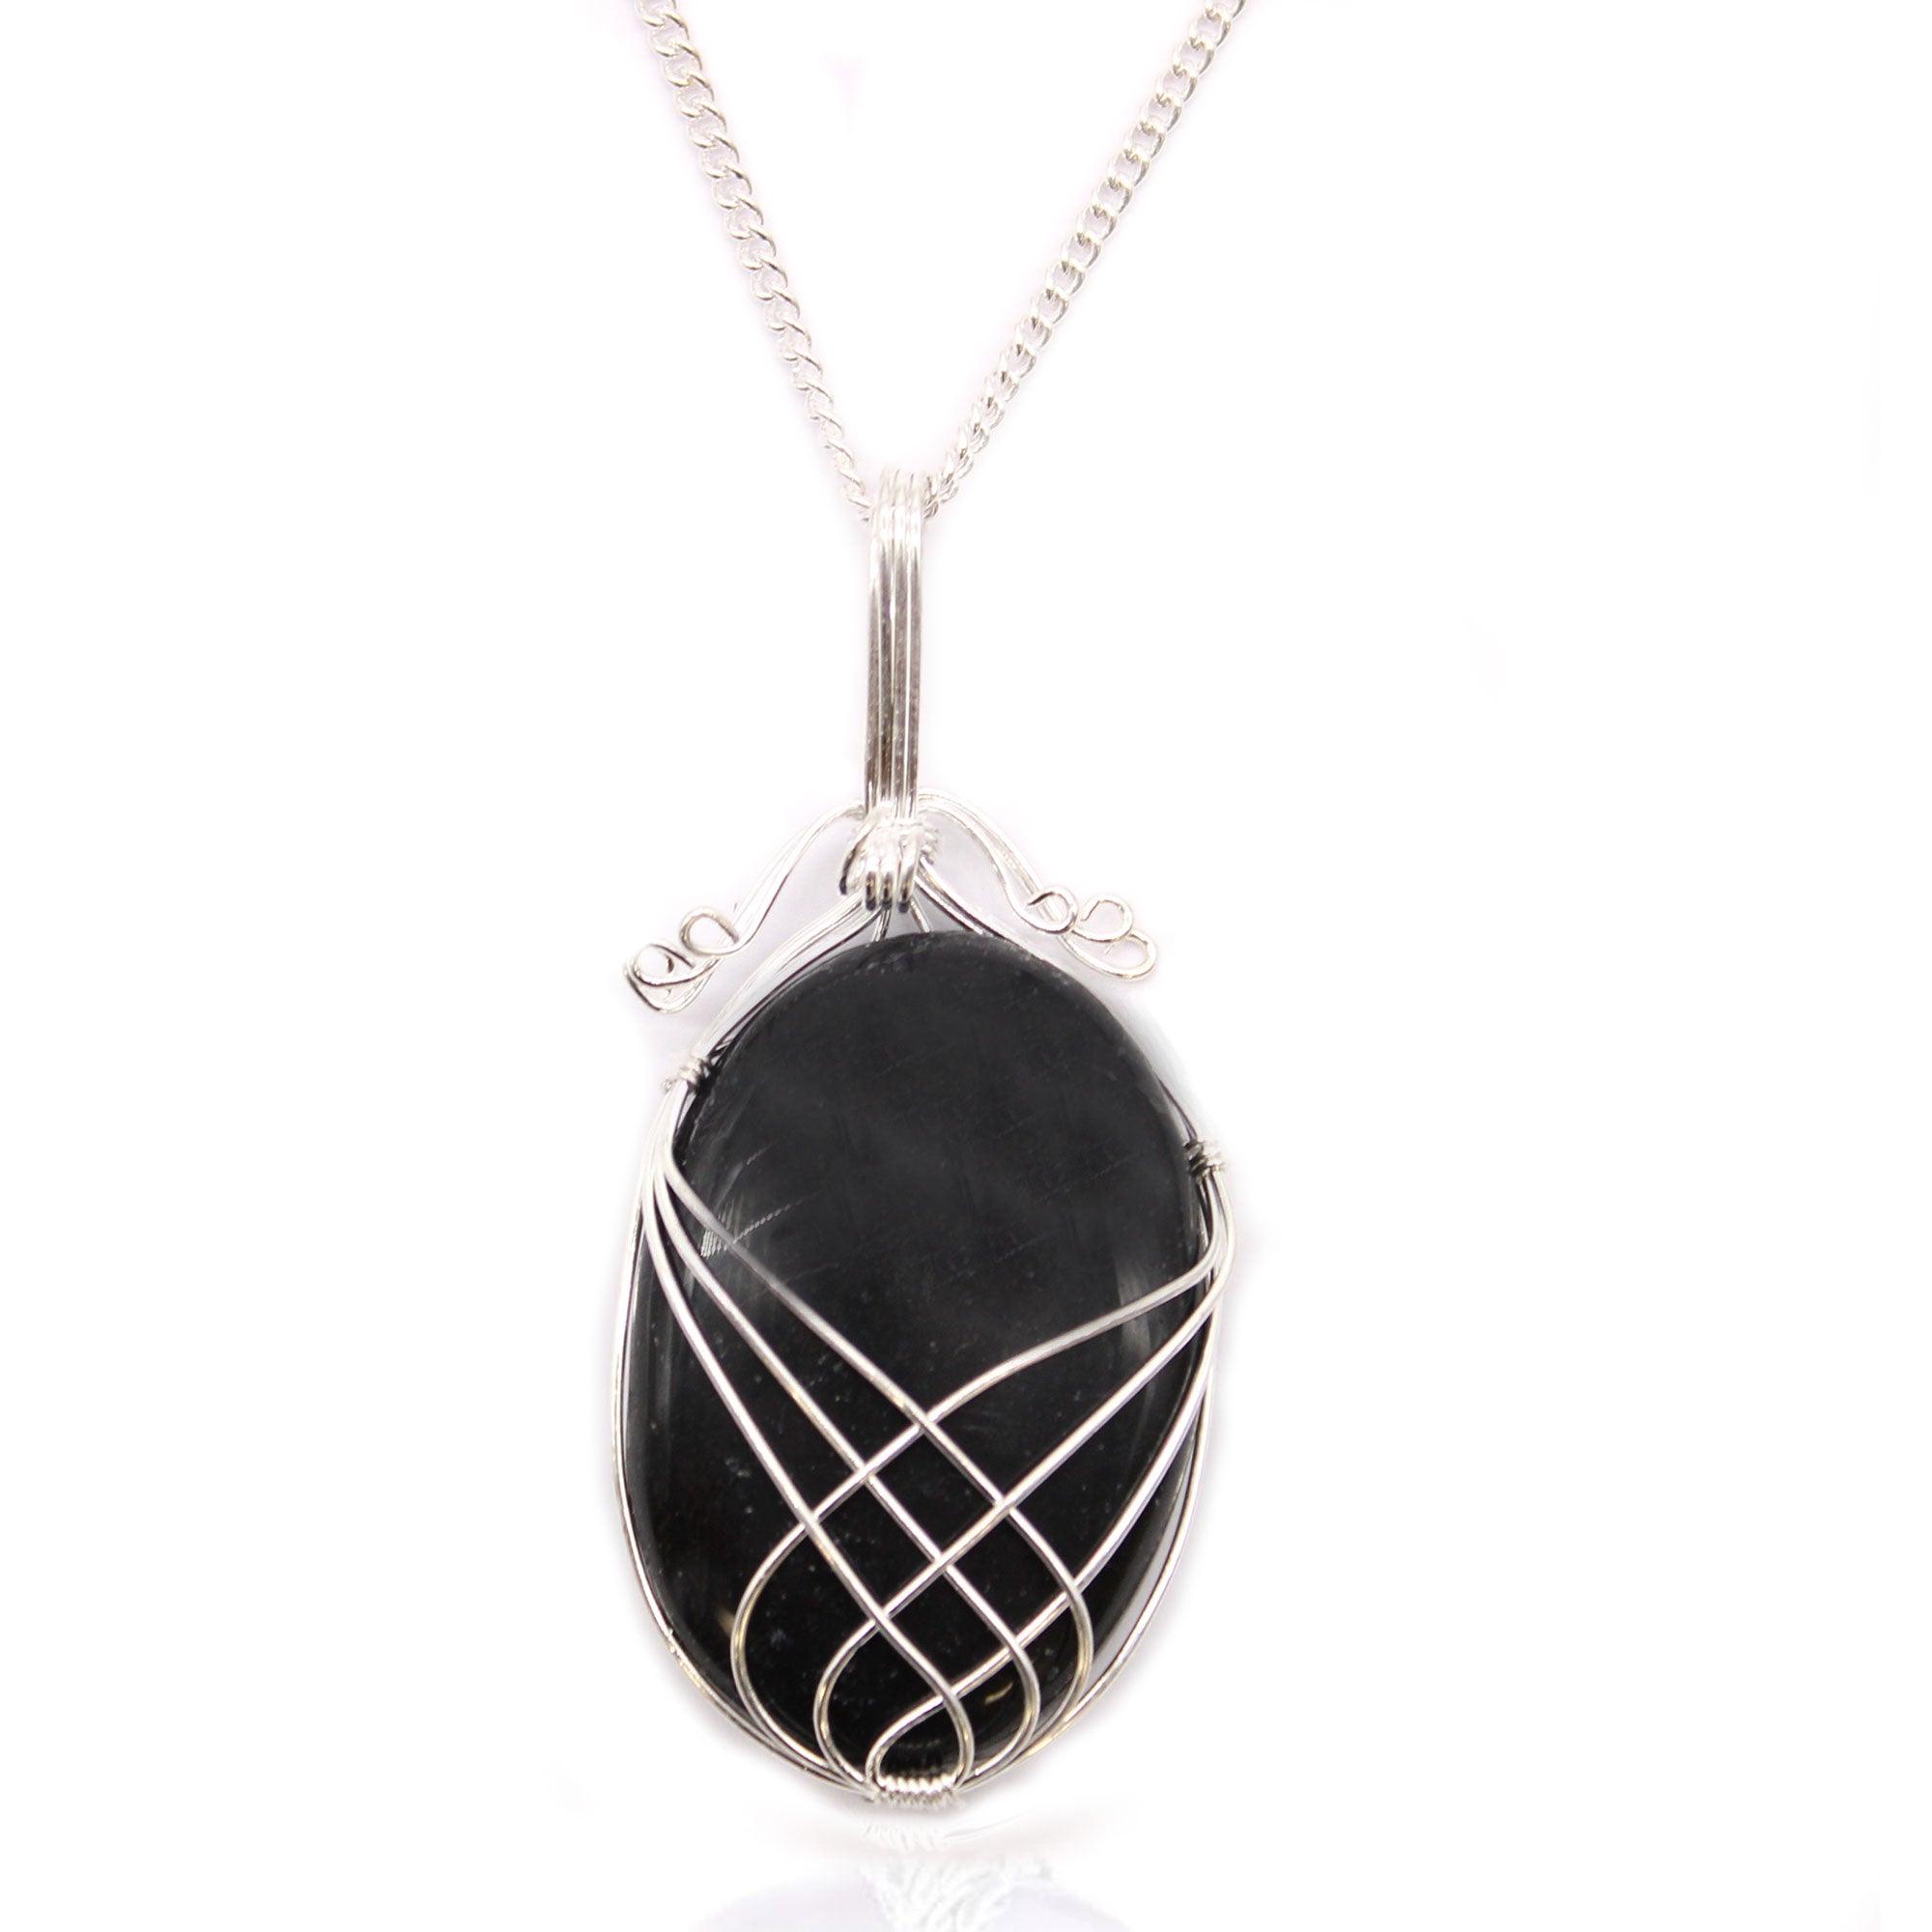 Swirl Wrapped Gemstone Necklace - Black Onyx - Charming Spaces